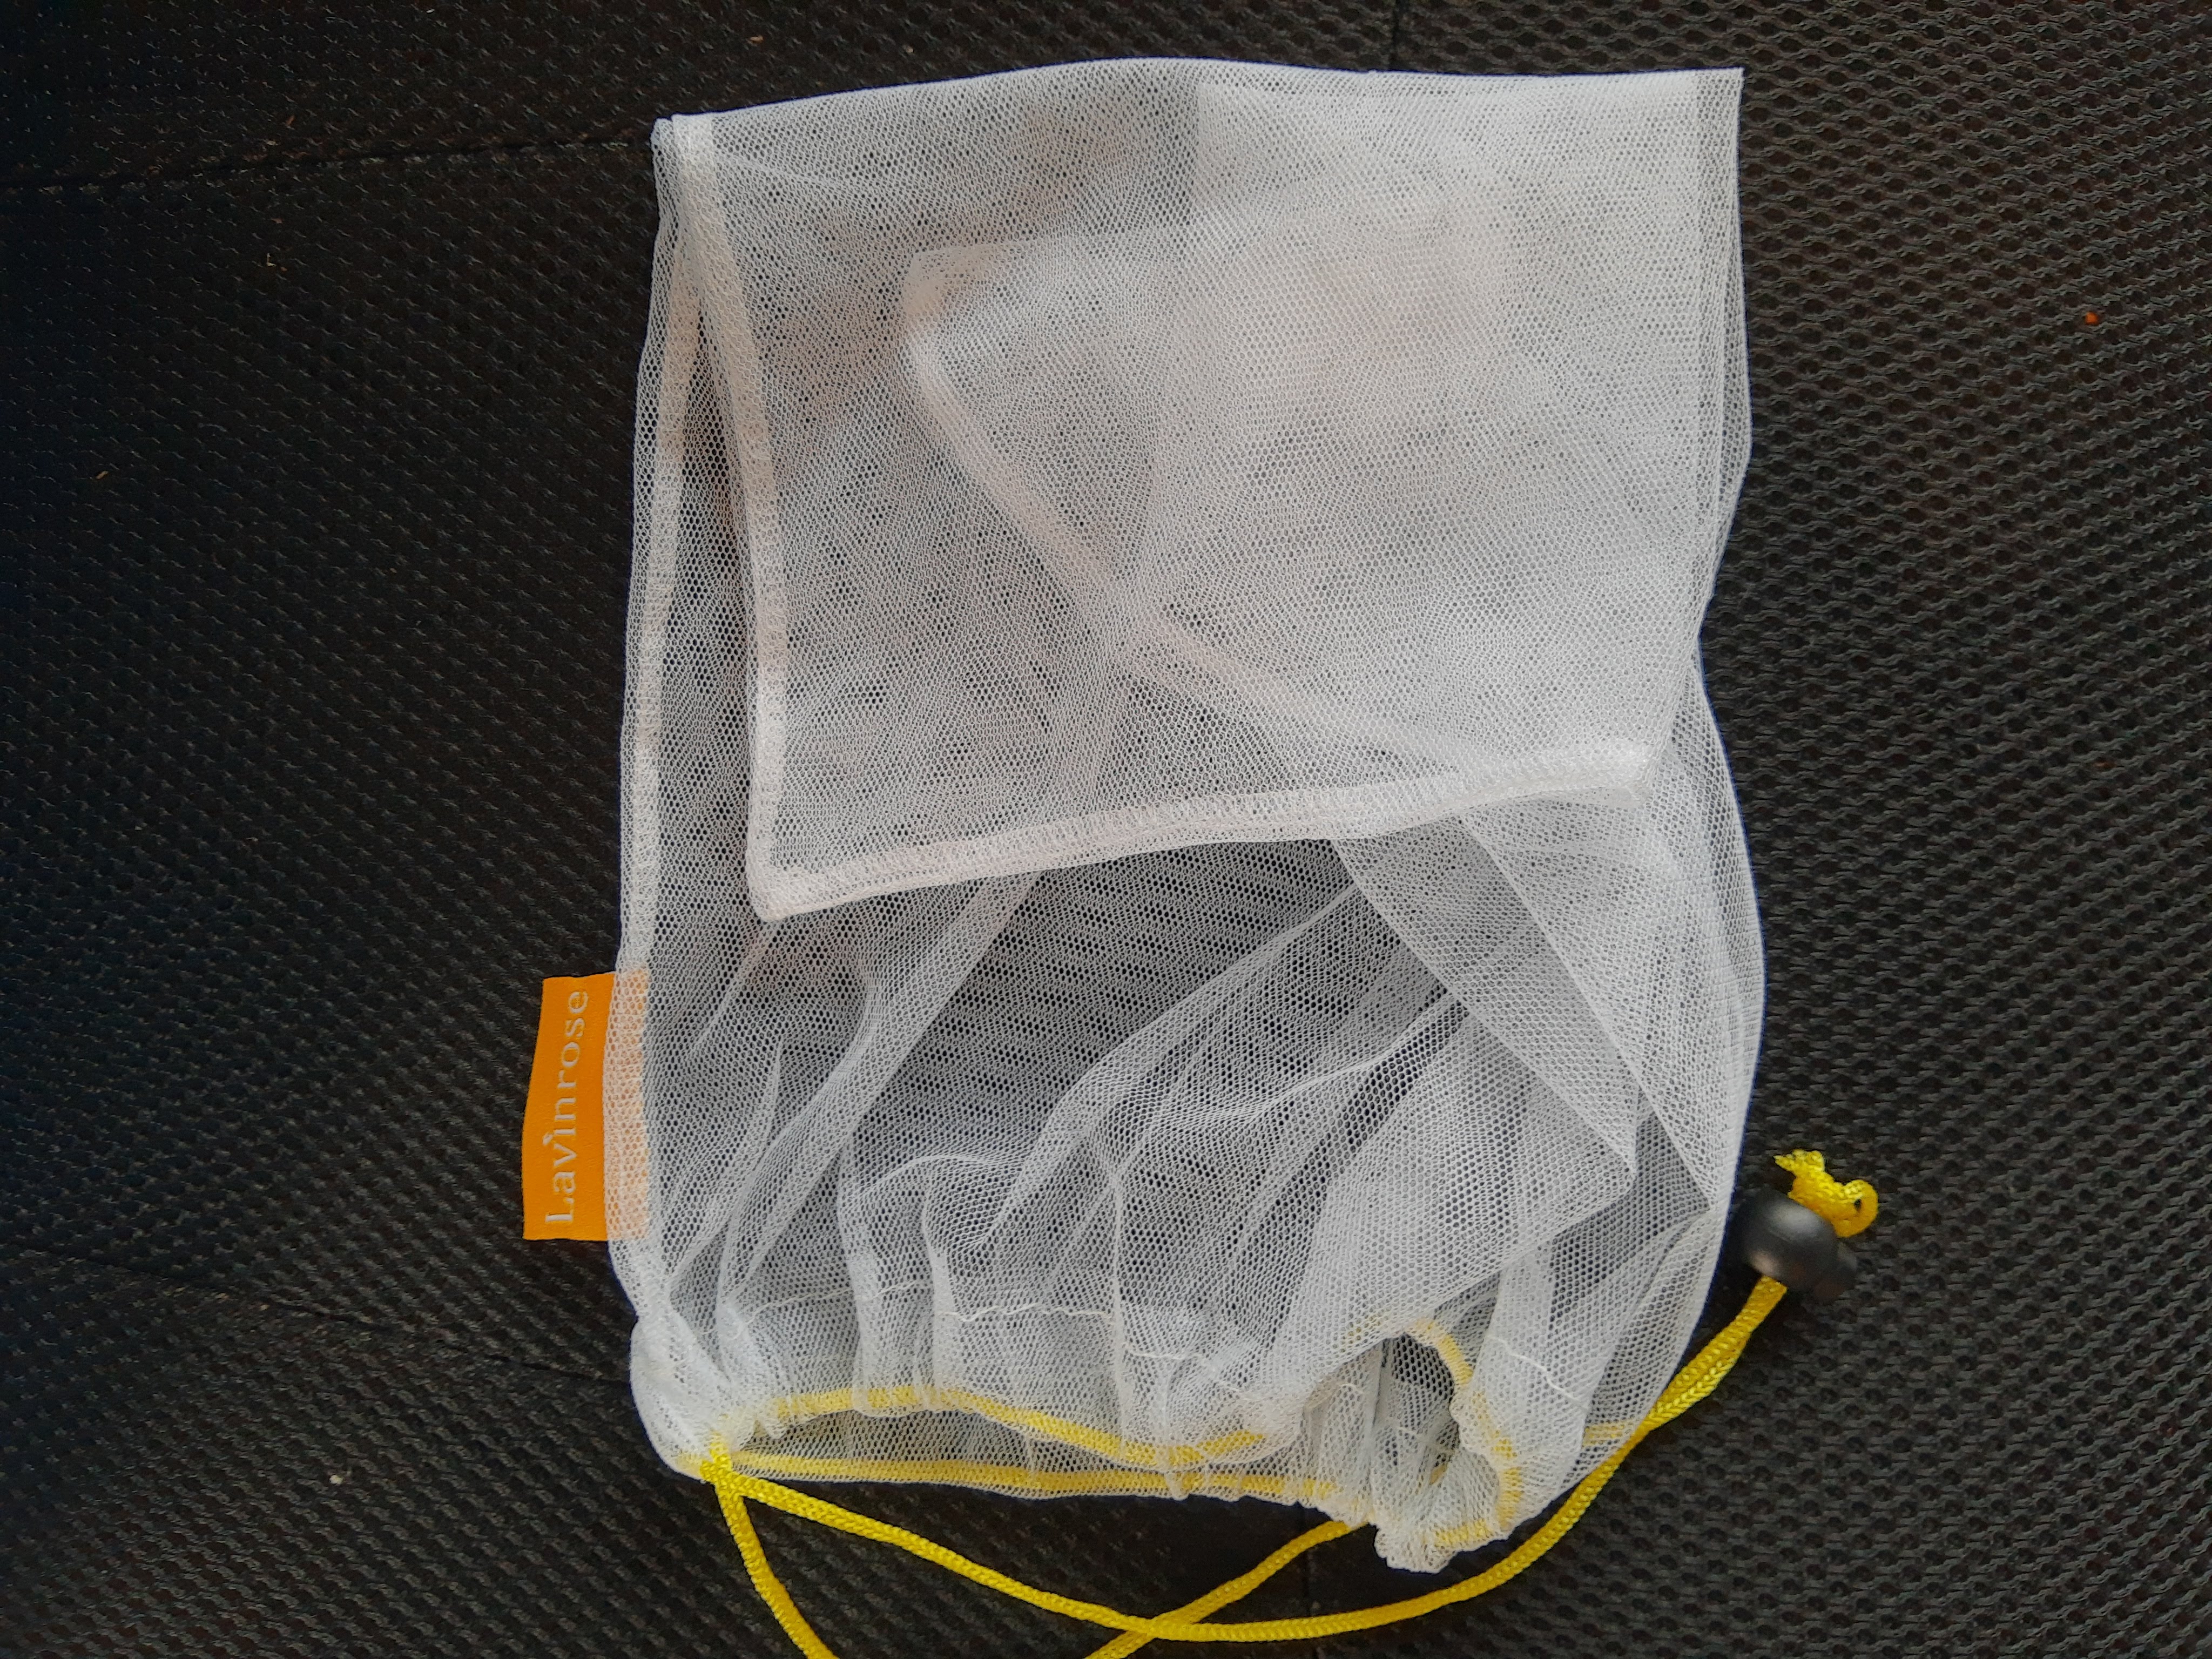 A mesh produce bag